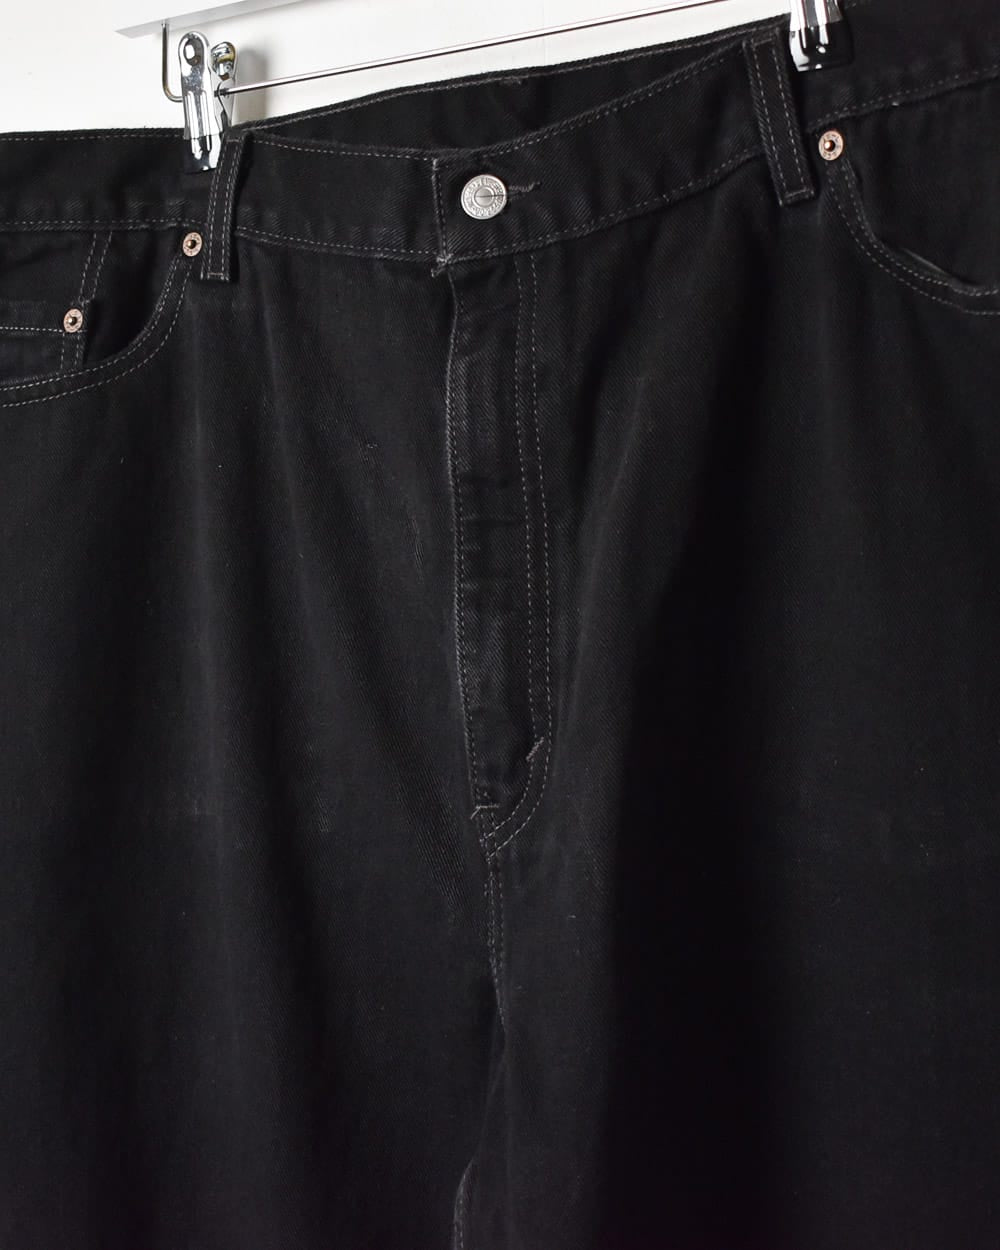 Black Levi's 550 Jeans - W32 L33